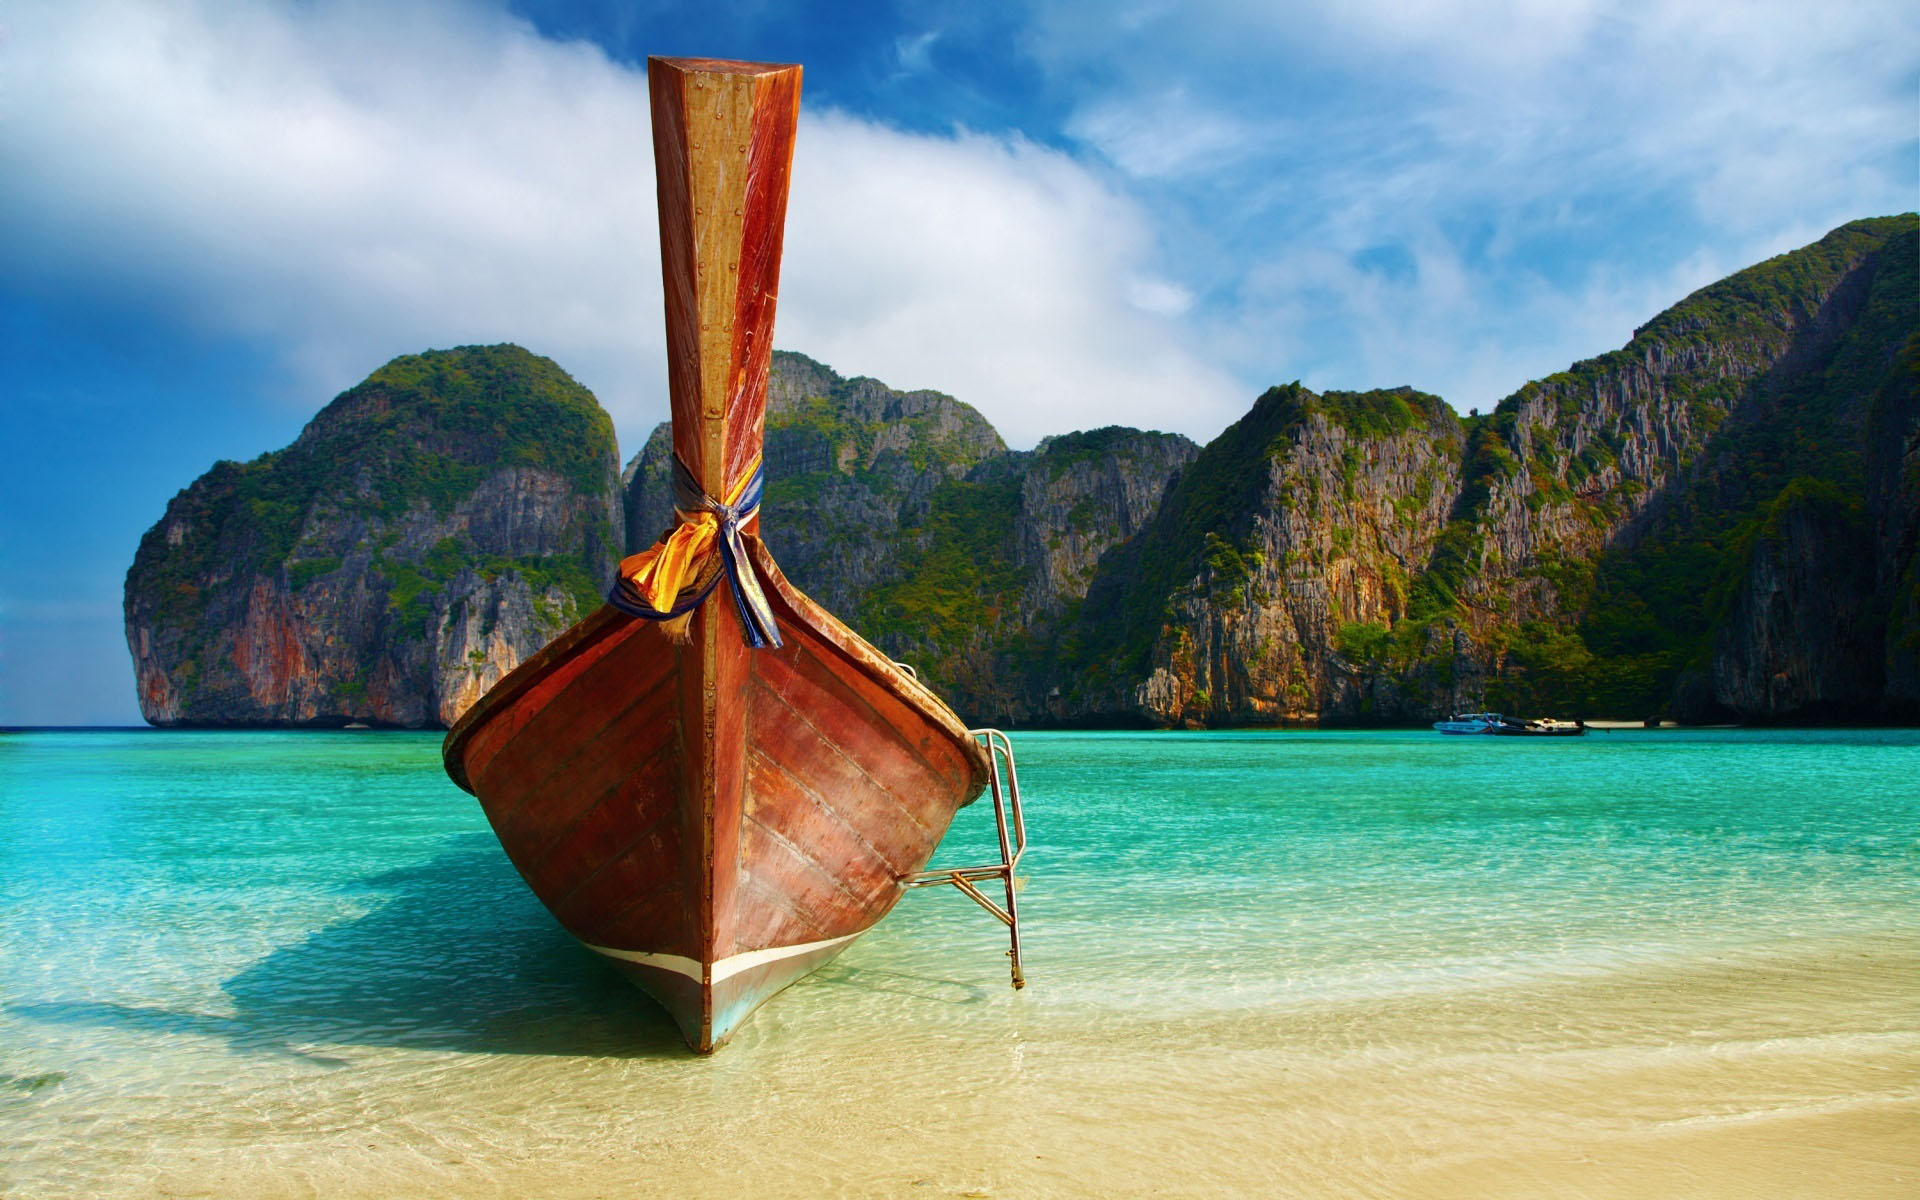 thailand, vehicles, boat, beach, canoe, coastline, earth, nature, ocean